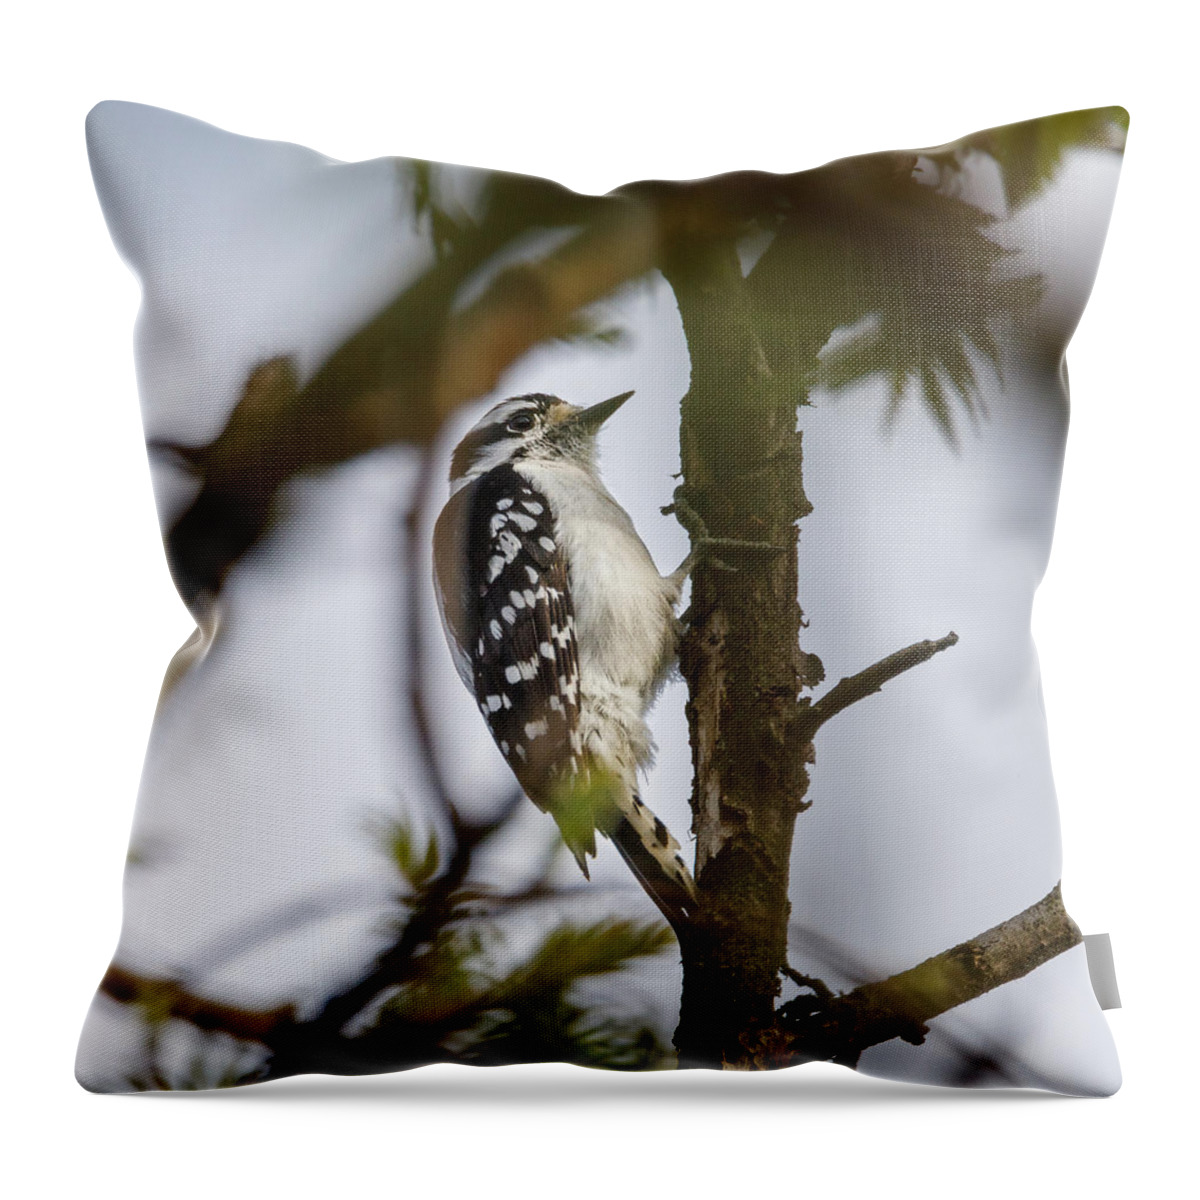 Bird Throw Pillow featuring the photograph Downy Woodpecker by David Beechum